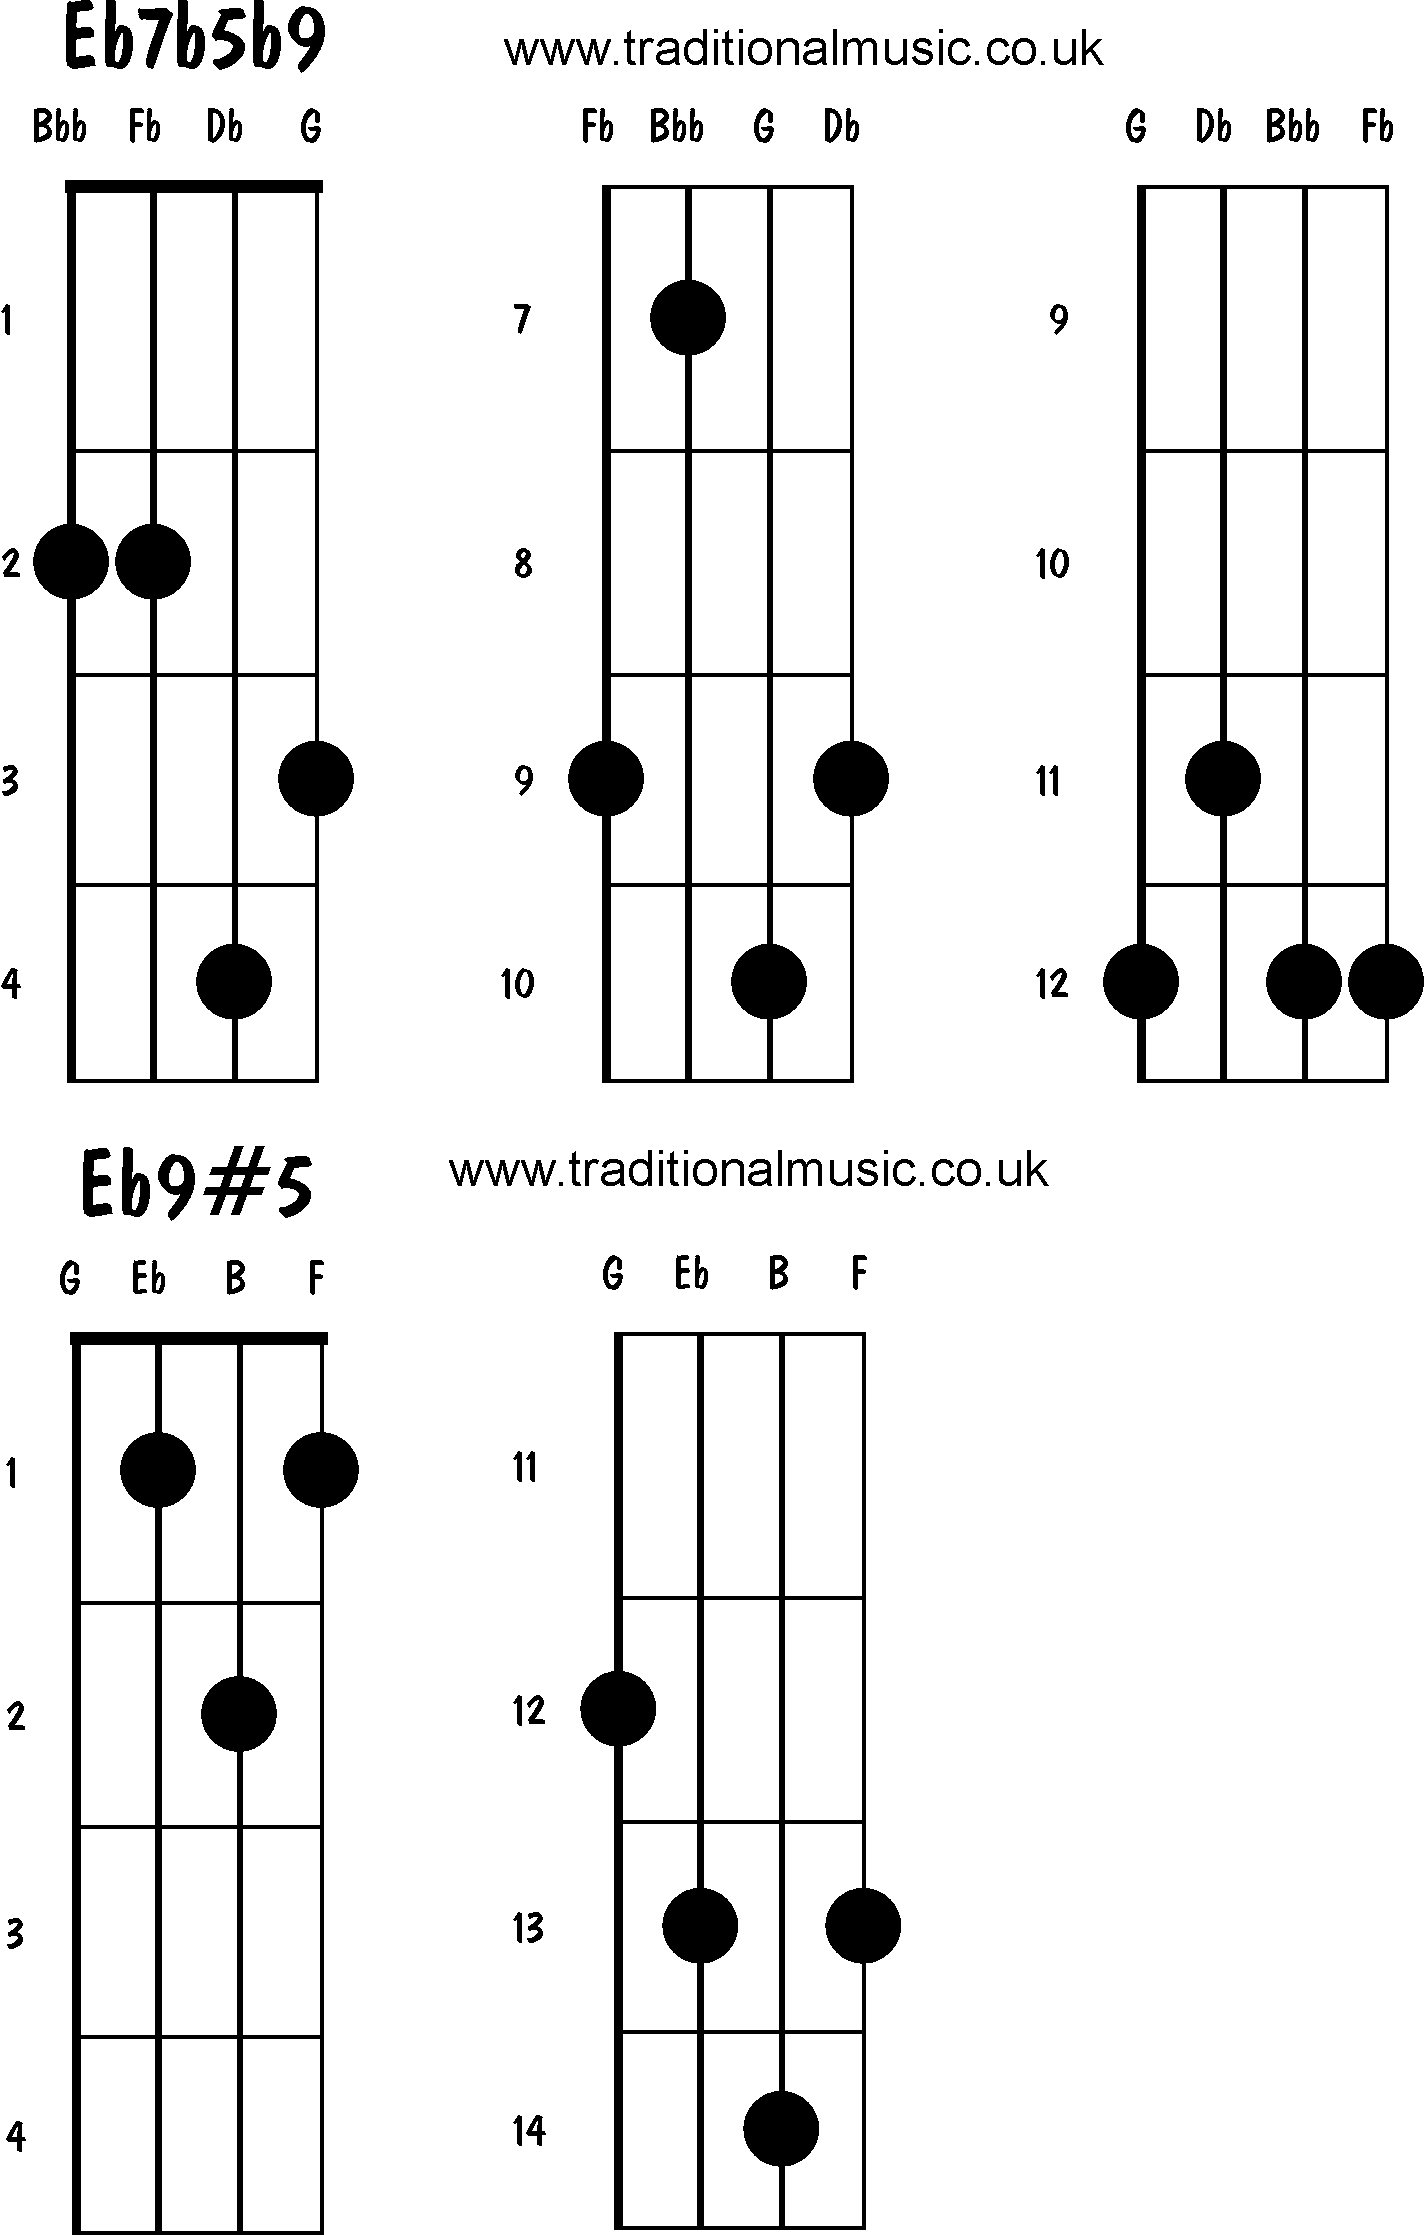 Advanced mandolin chords: Eb7b5b9, Eb9#5